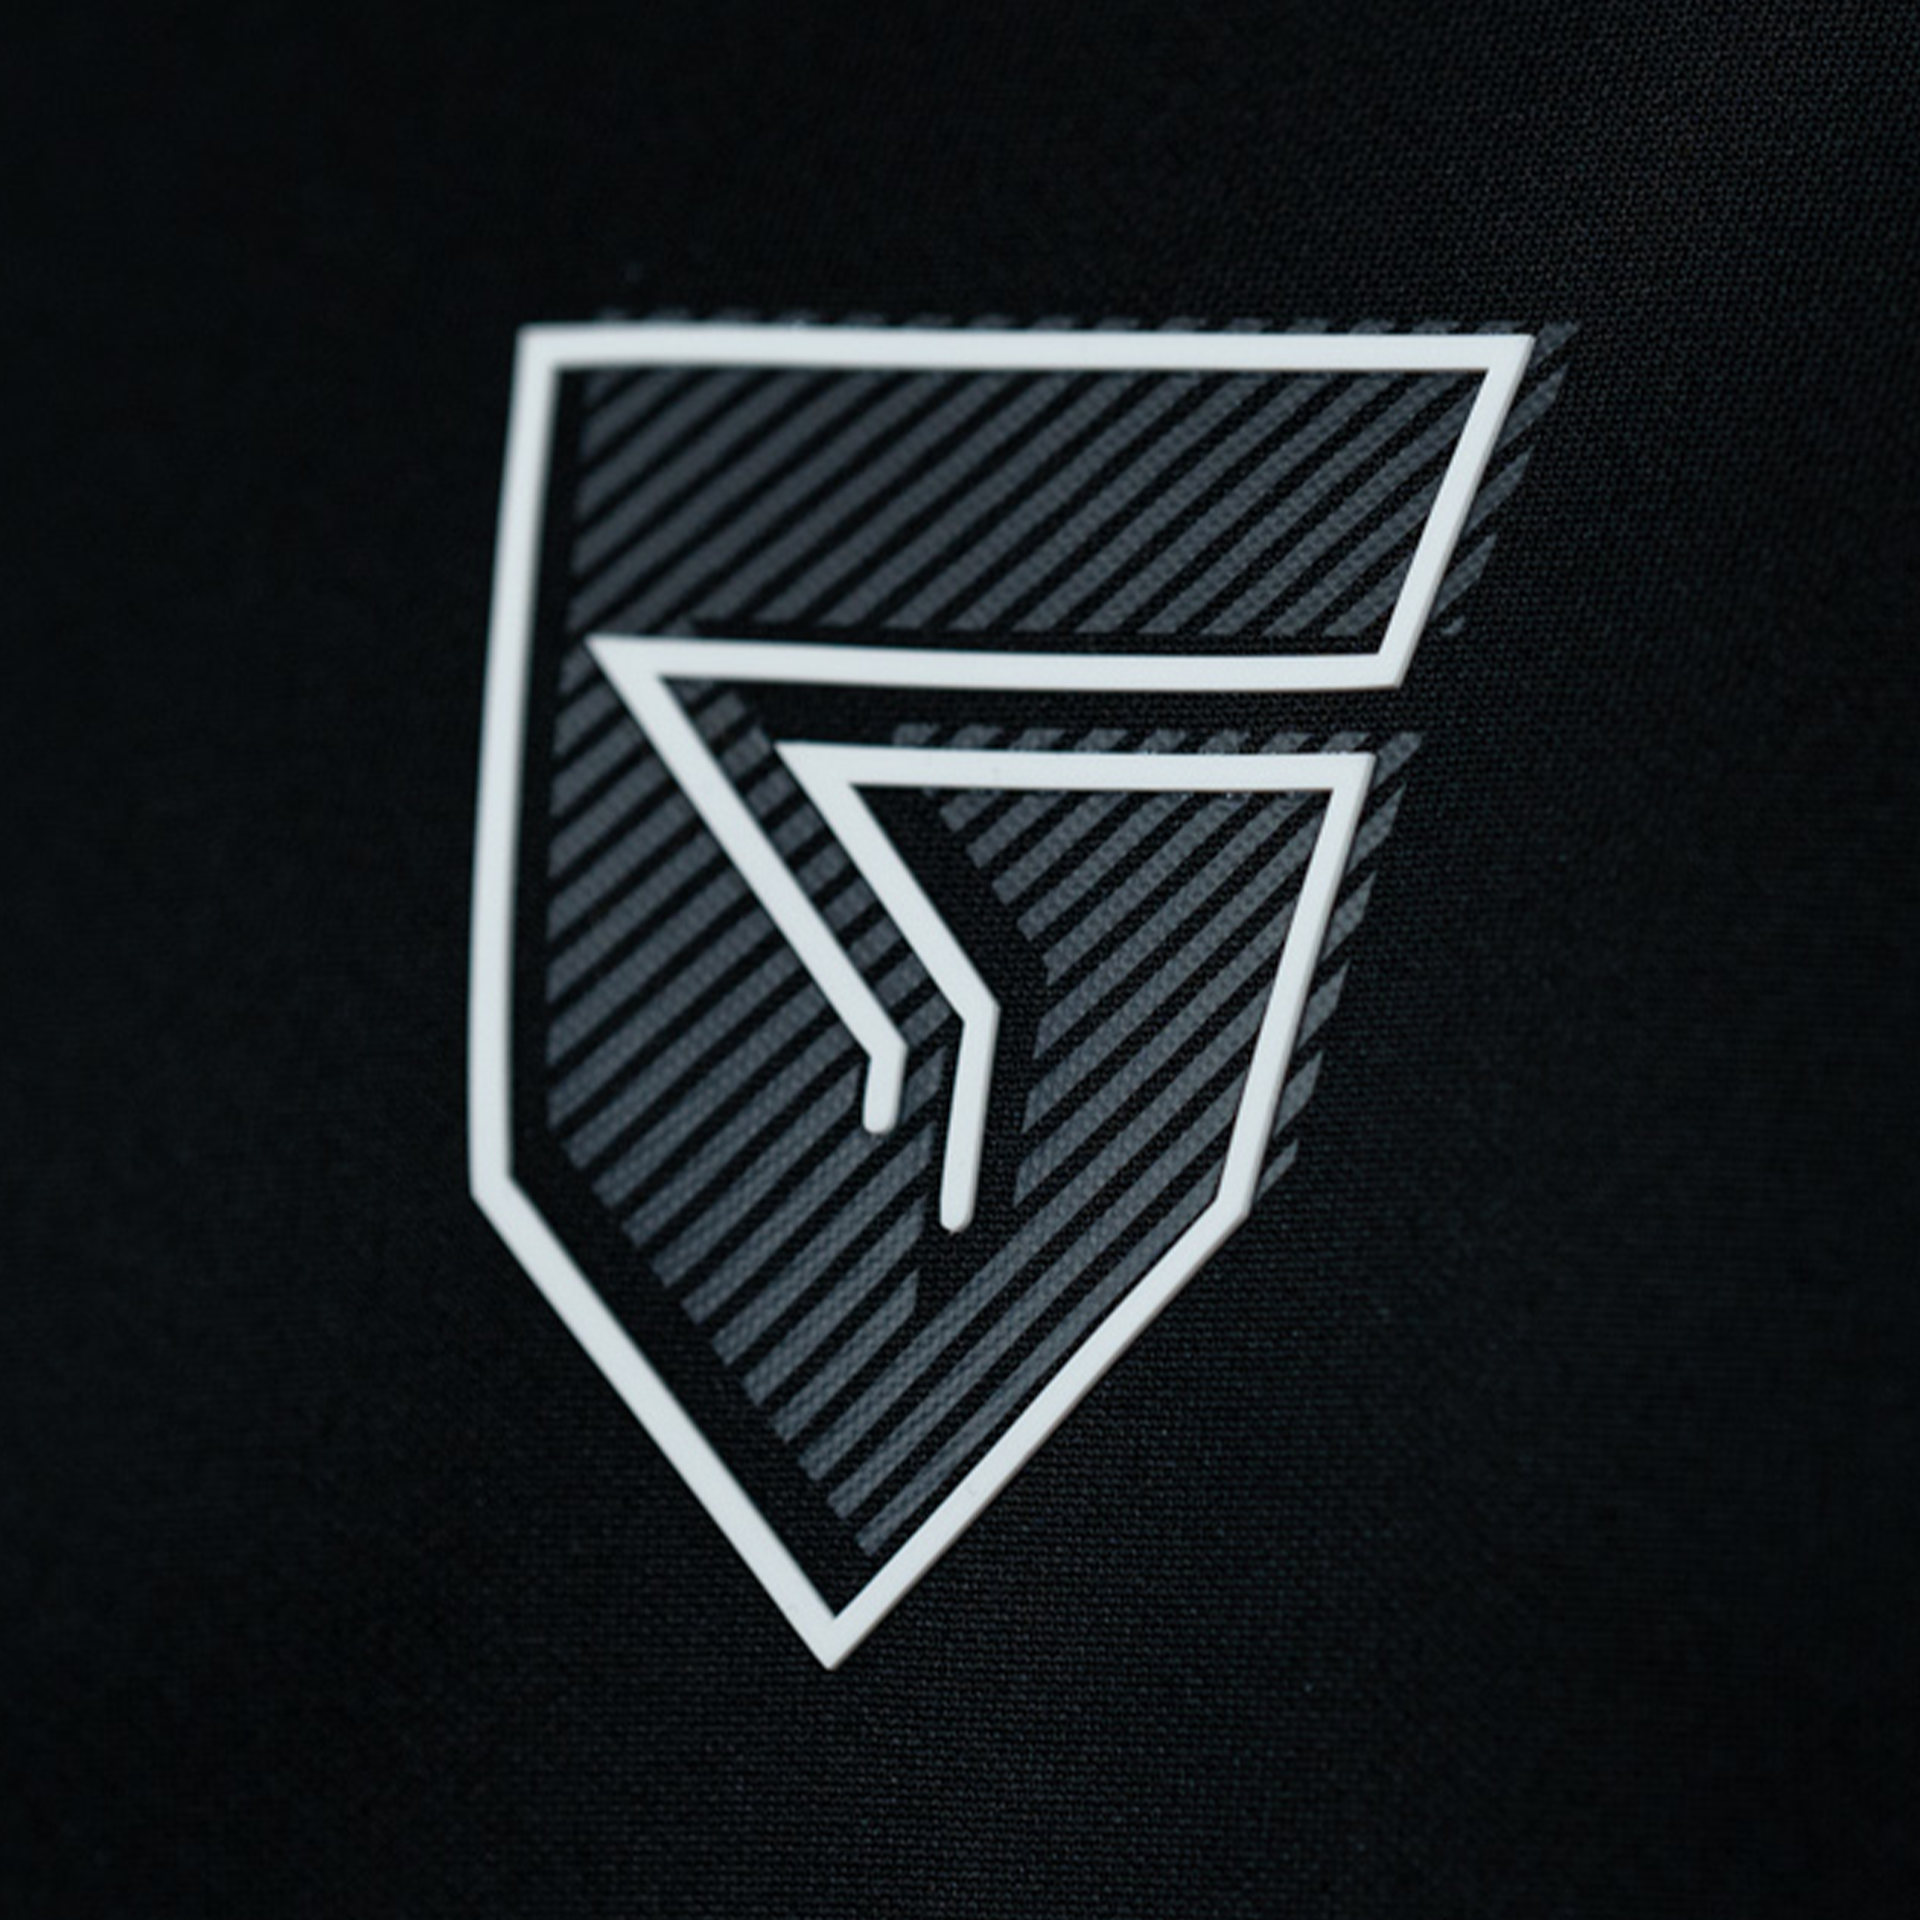 Giants Gaming team logo